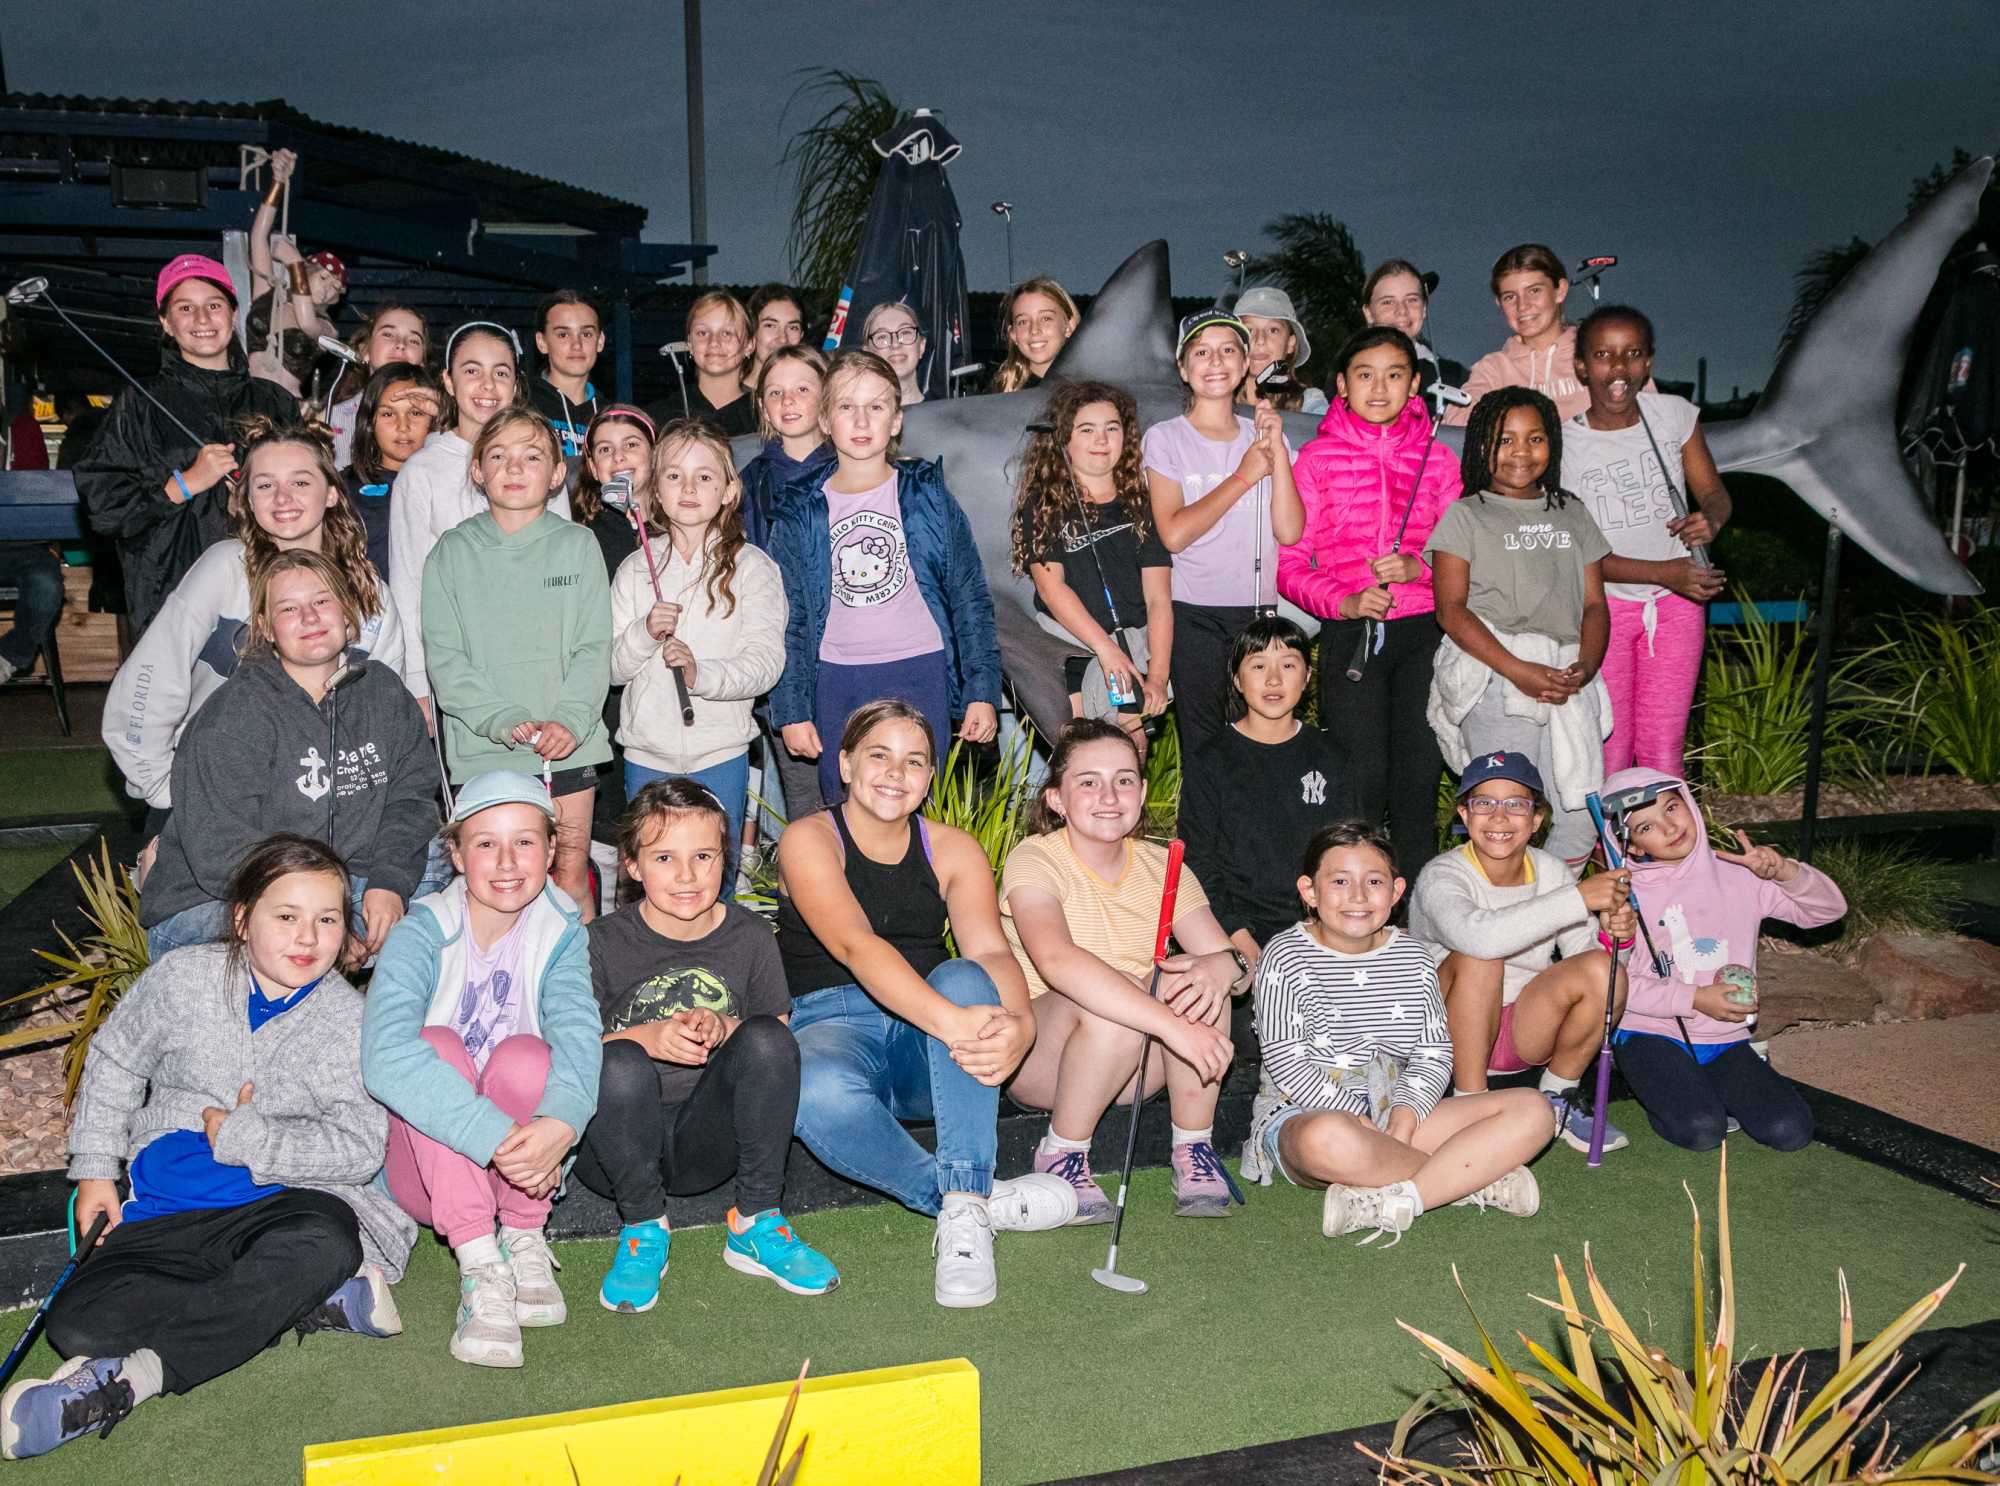 South Australian girls camp mini golf night